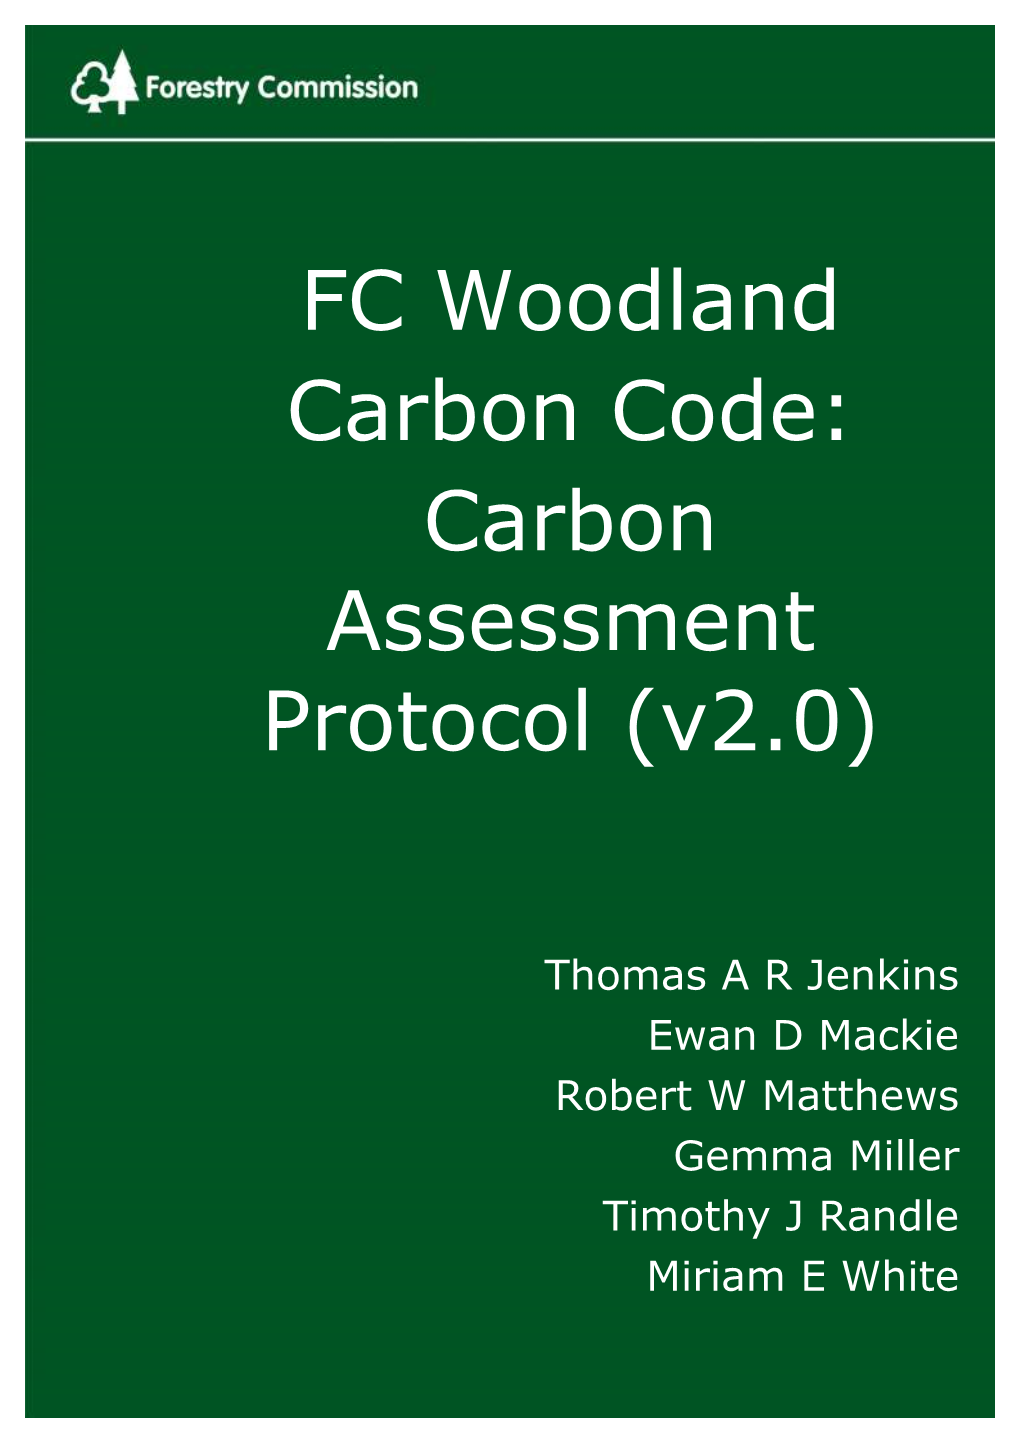 Carbon Assessment Protocol